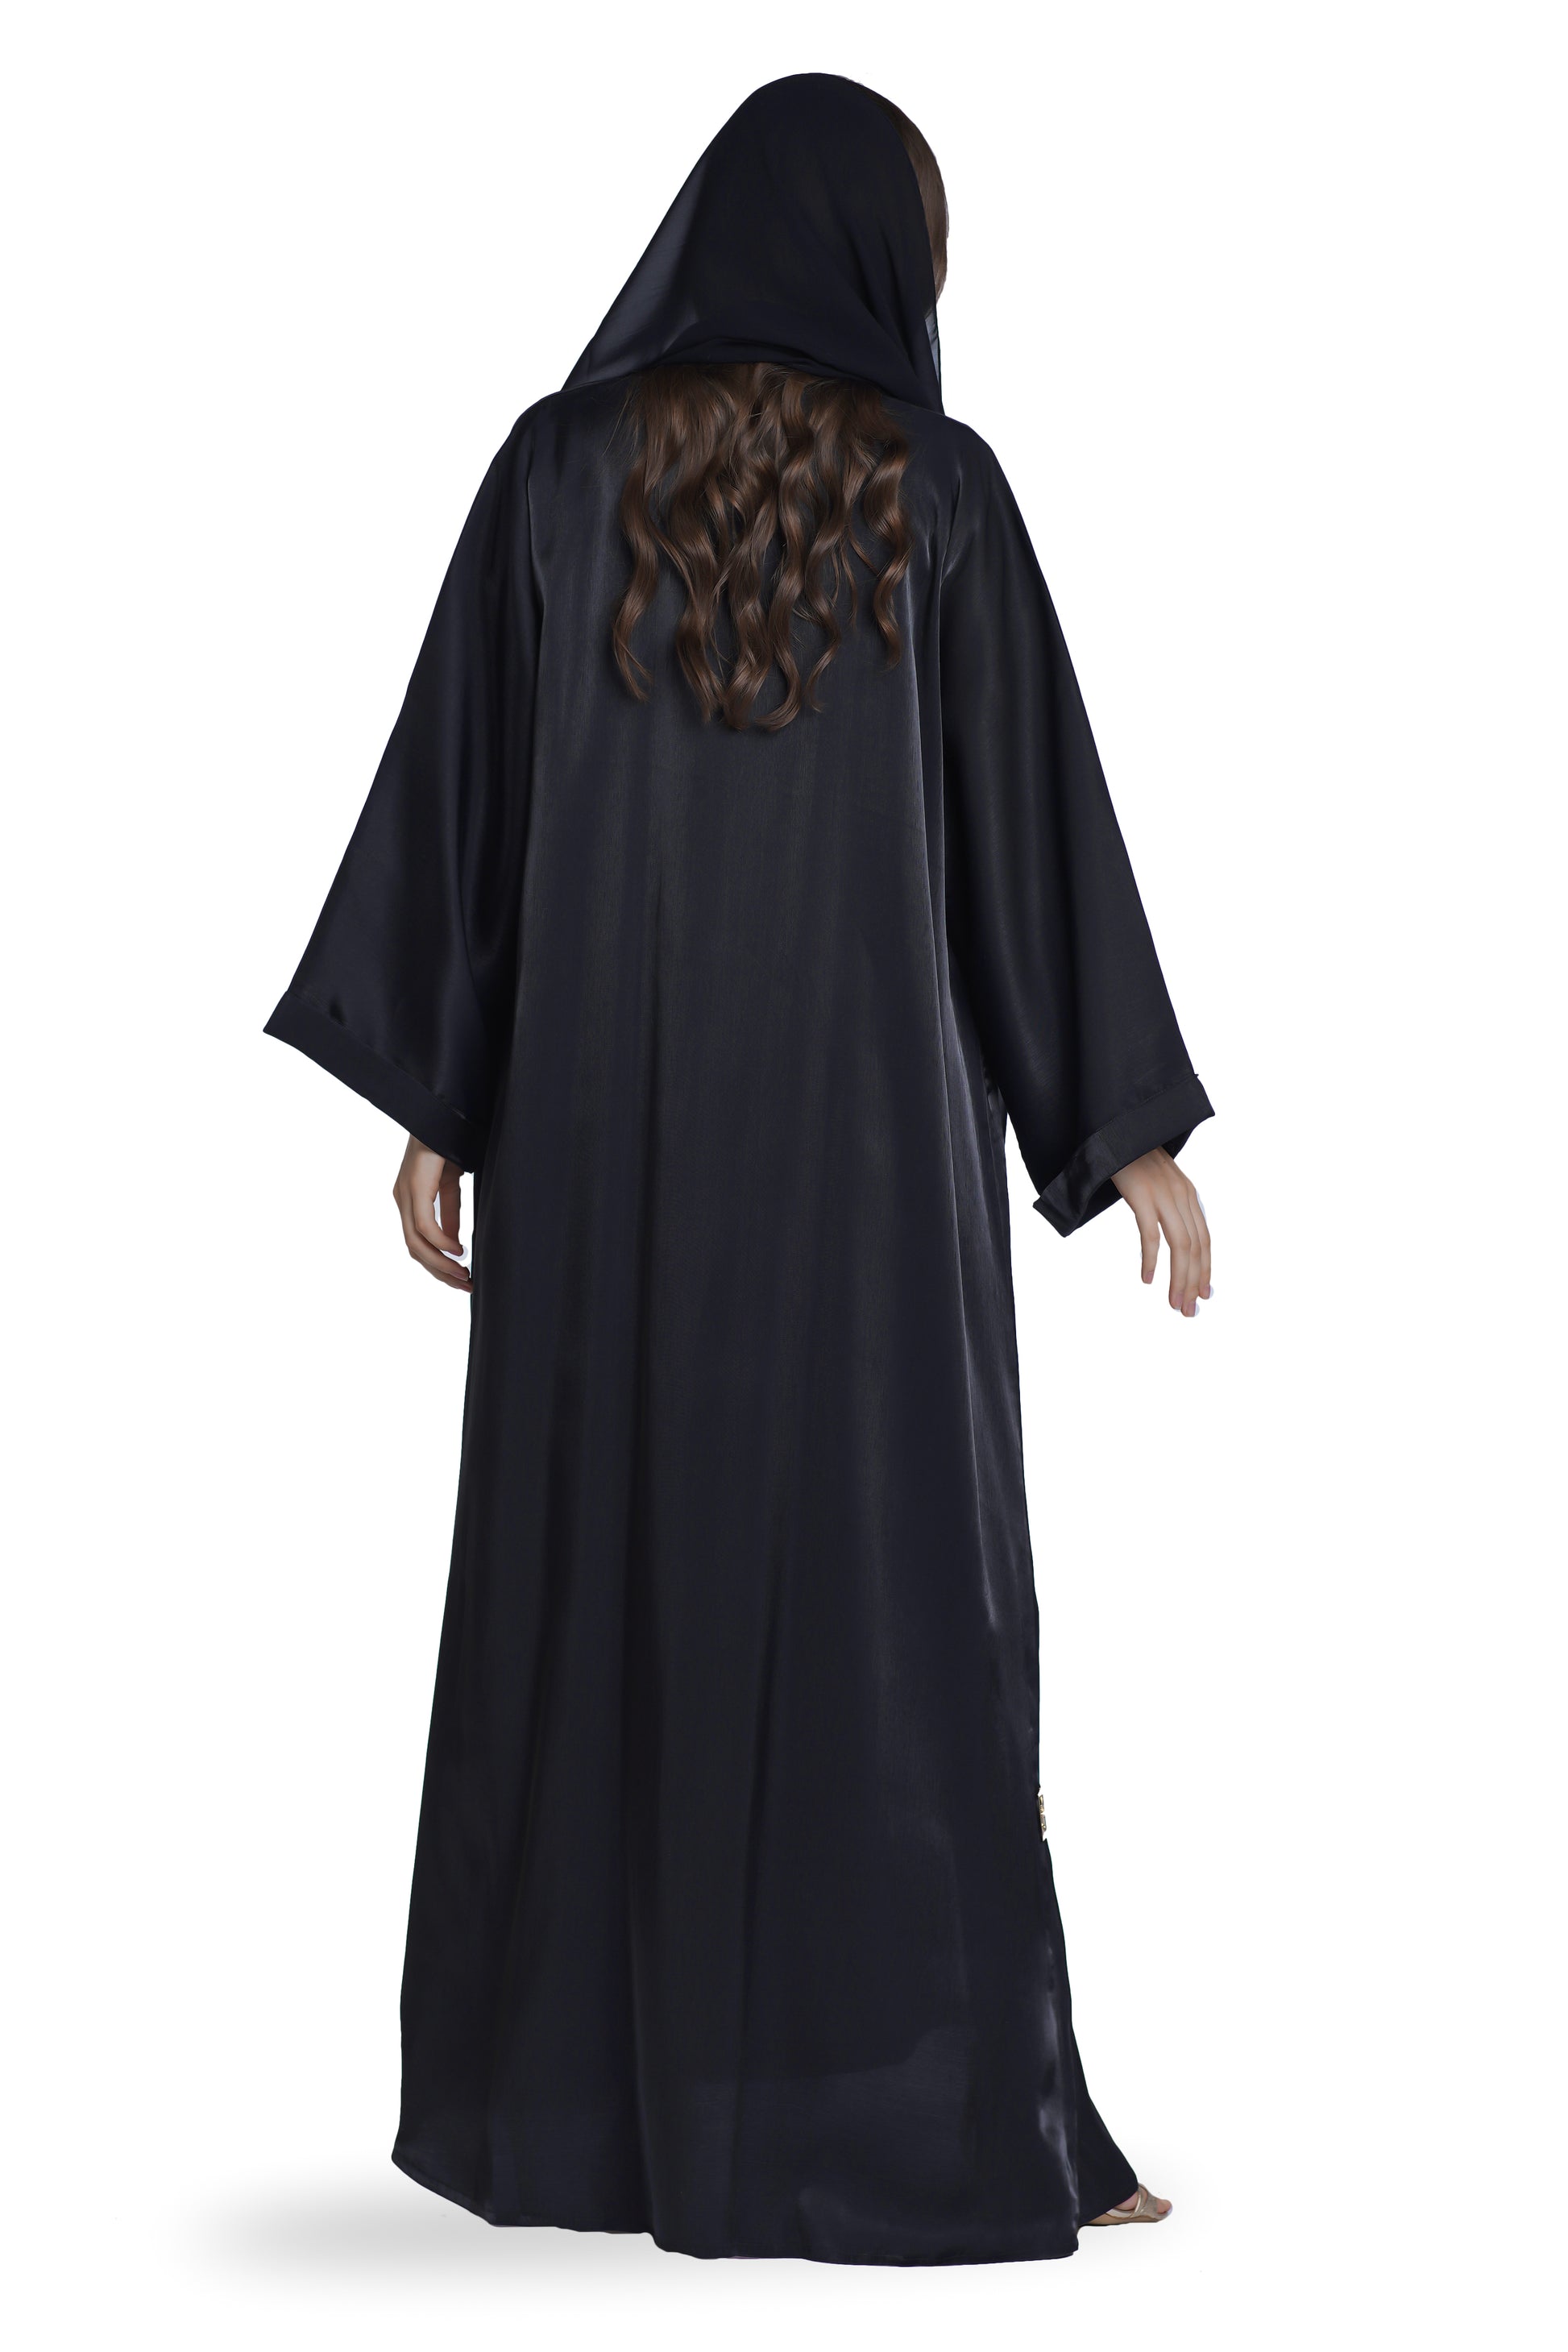 Black Sheen Abaya - Fashion by Shehna